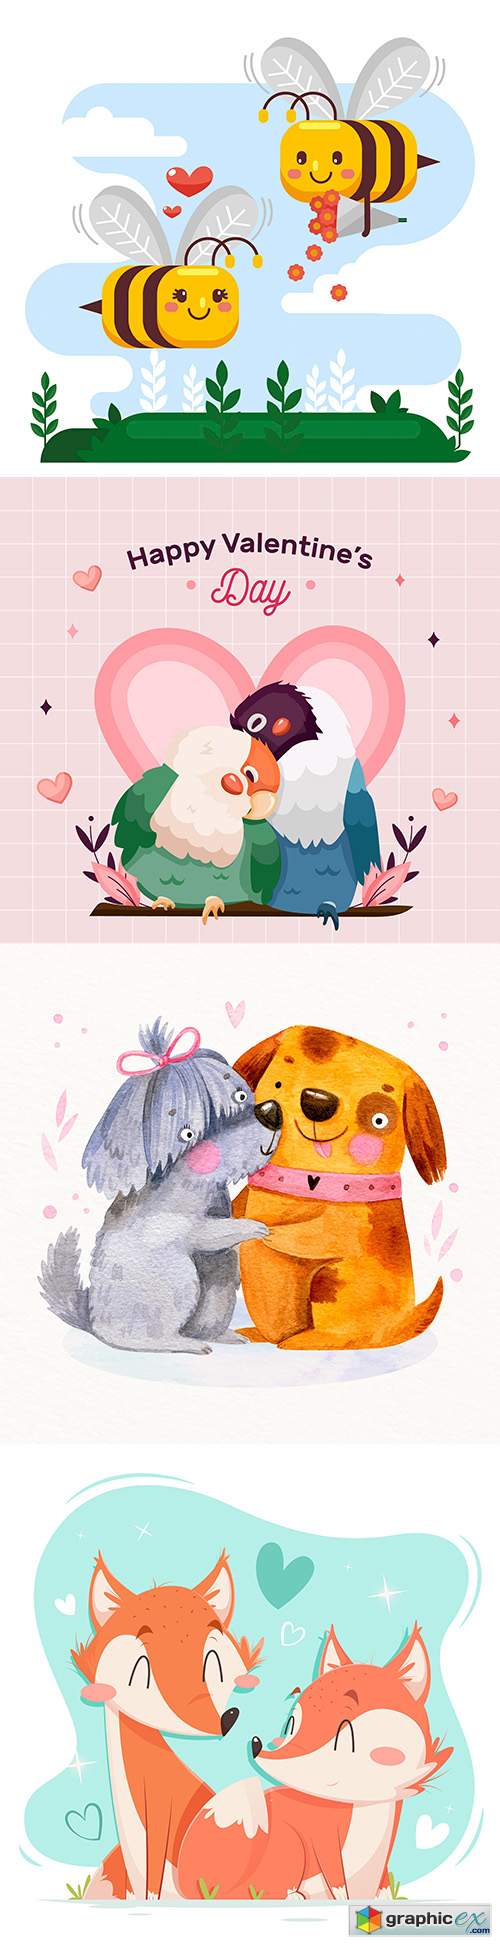  Valentine's Day romantic pair cartoon animal illustration 